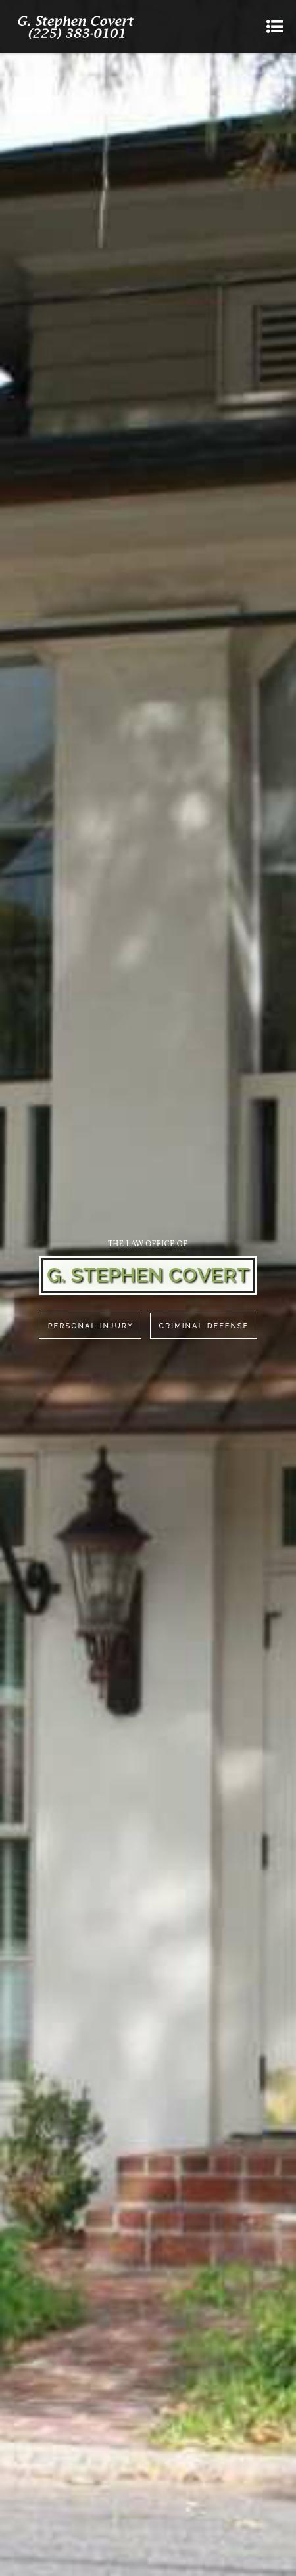 Covert G Stephen - Port Allen LA Lawyers